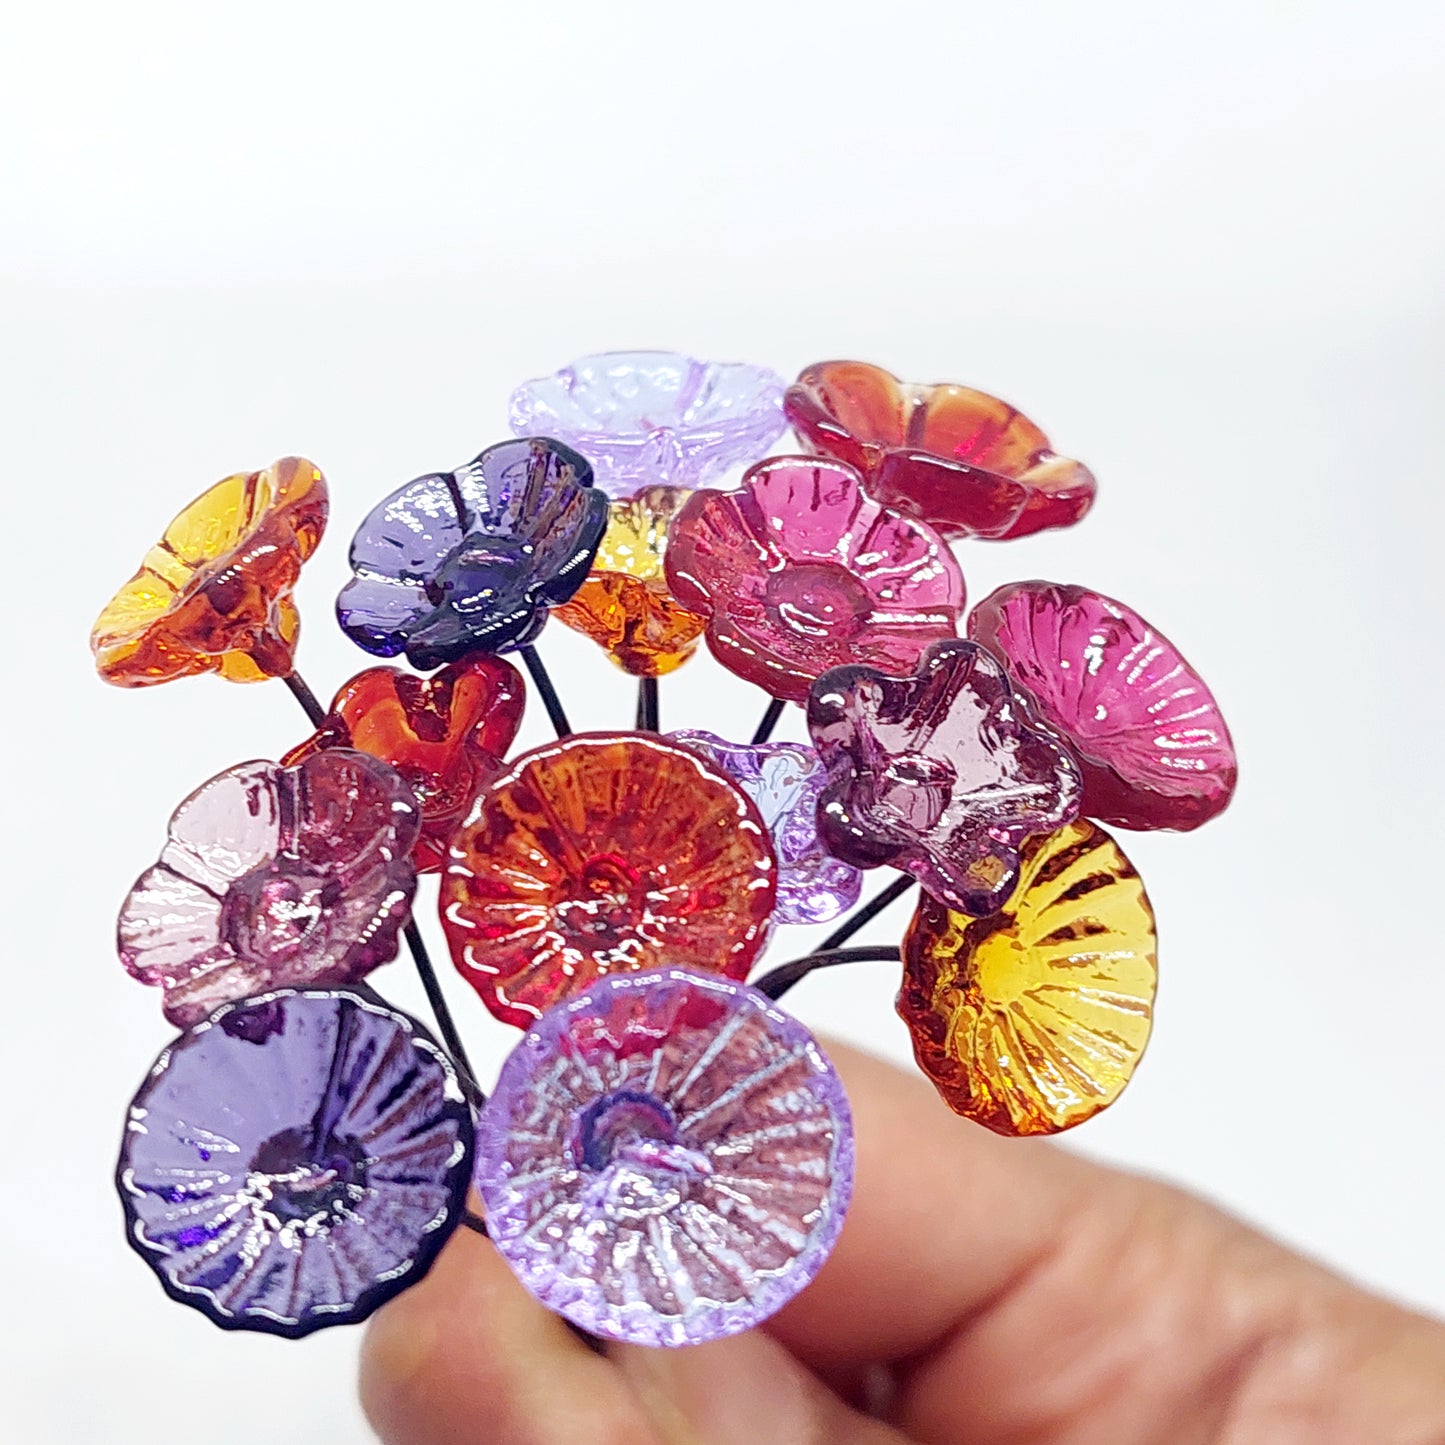 BESTSELLER!! Glass Art - Extra Large "Tropical" Mini Flower Bouquet